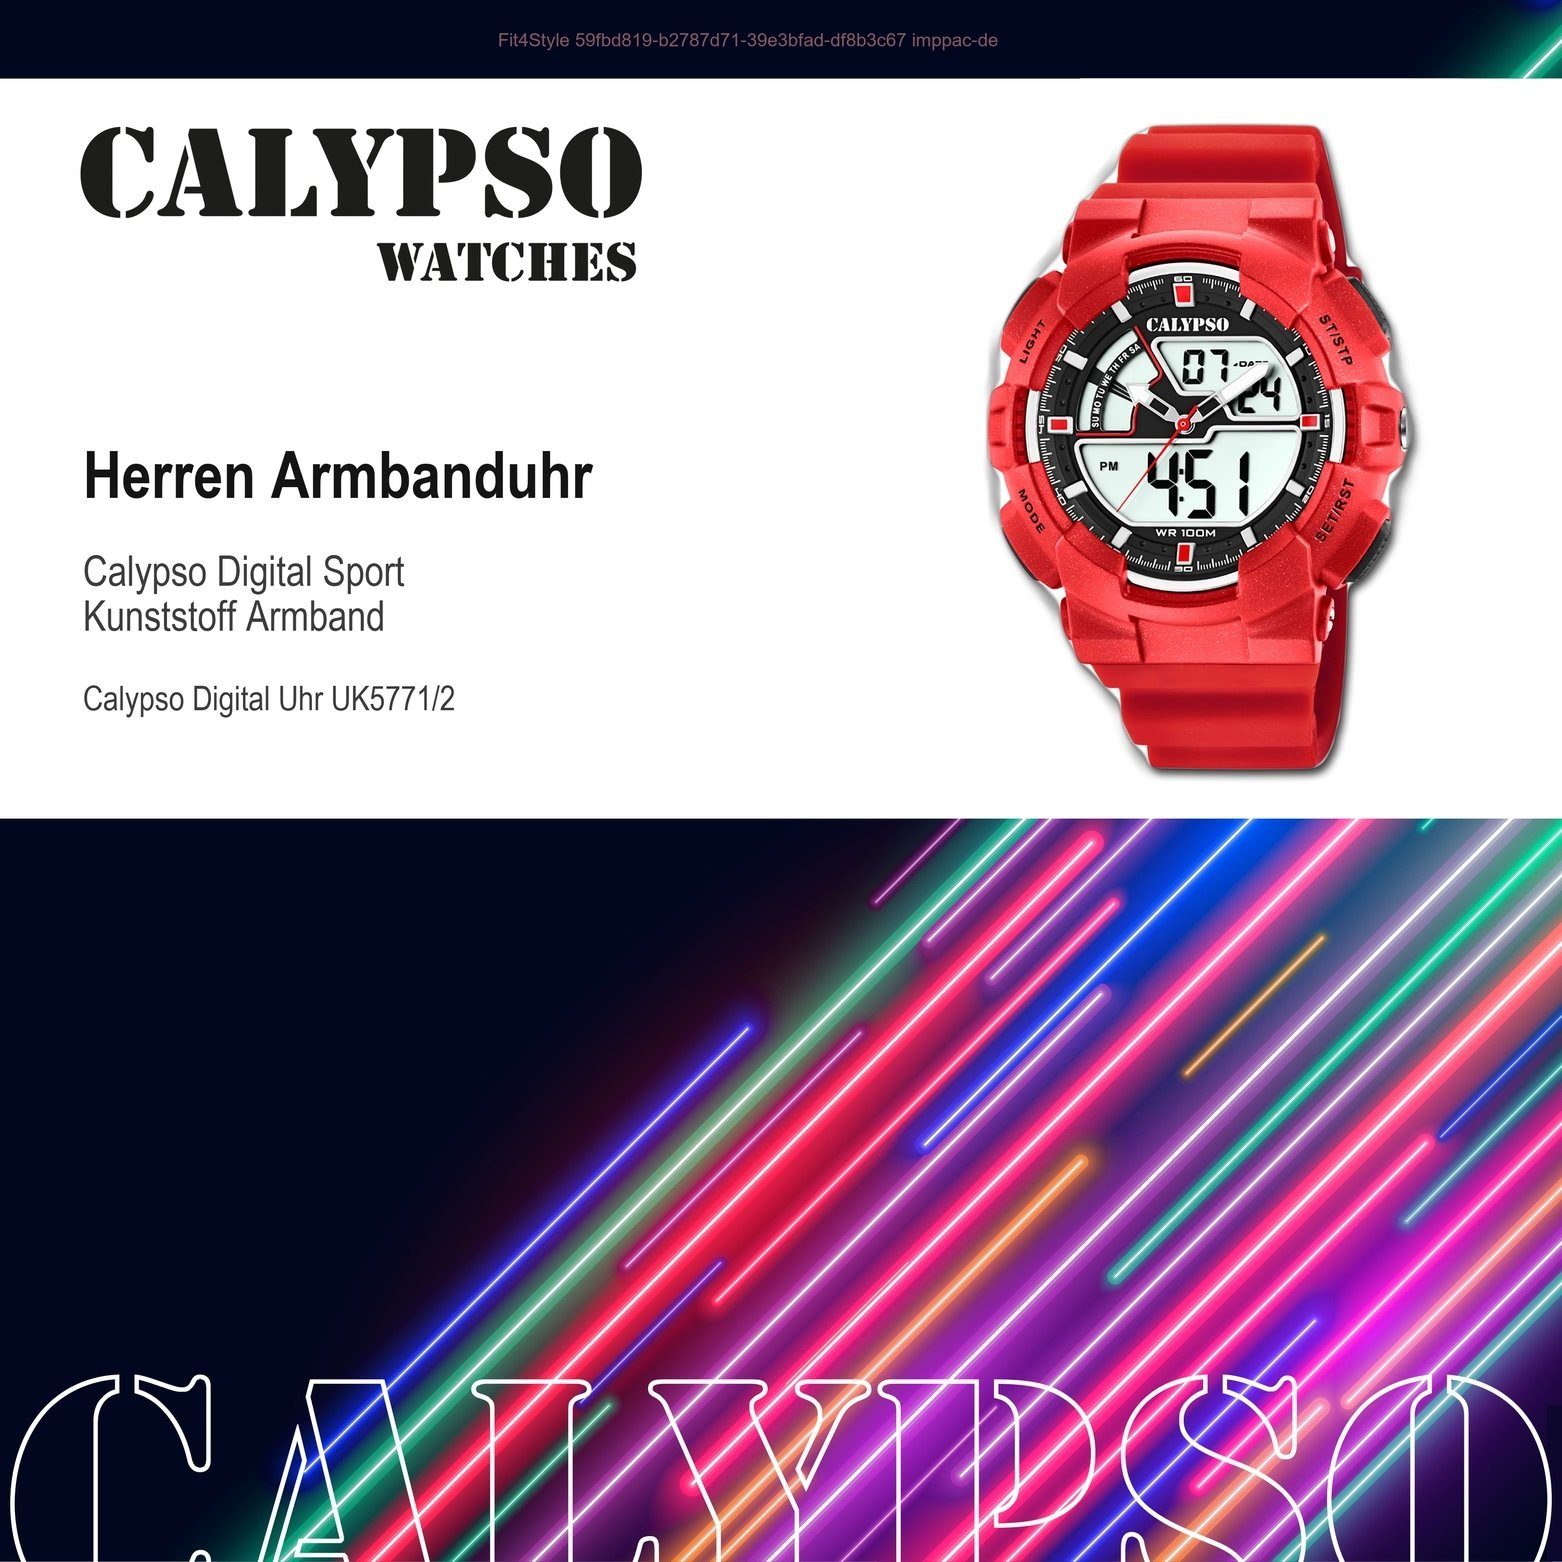 Sport Digitaluhr Calypso Herren PUarmband rot, WATCHES Herren Armbanduhr Kunststoff, K5771/2, rund, CALYPSO Uhr